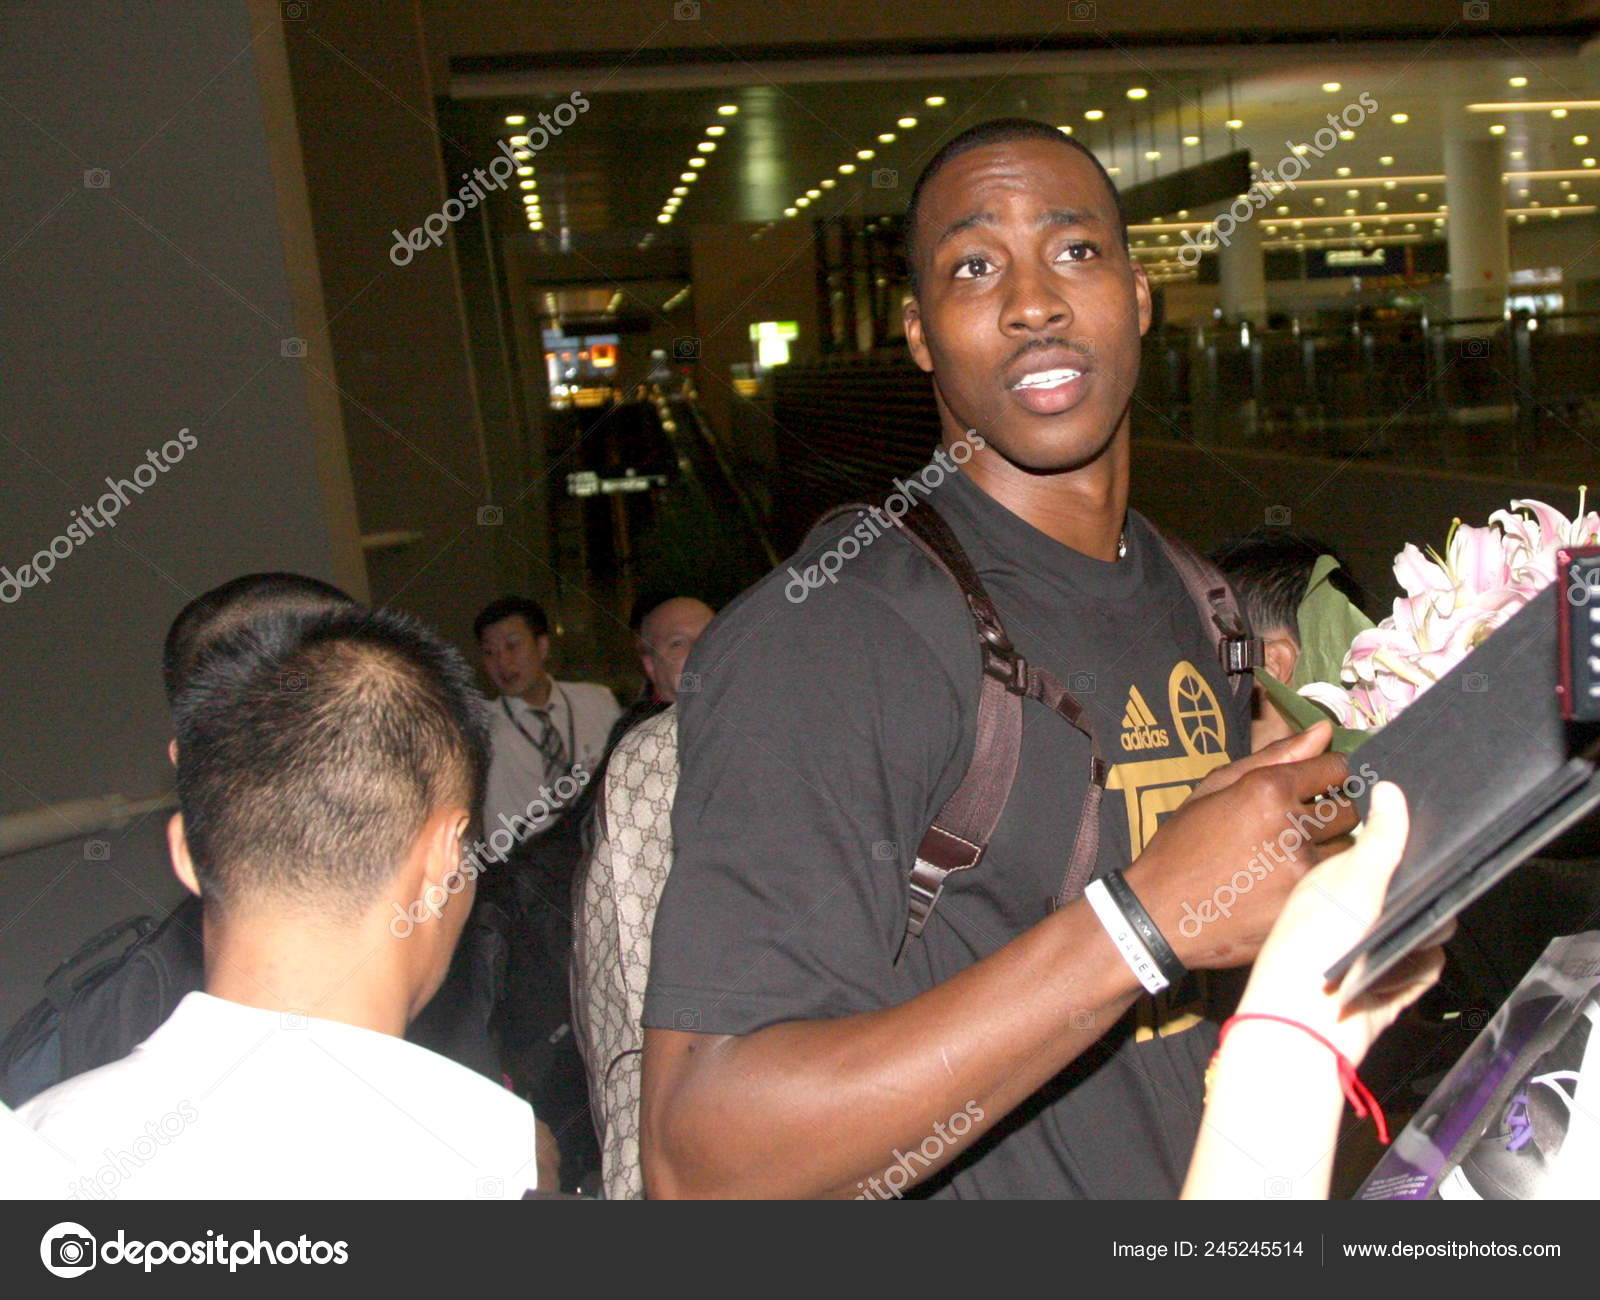 Nba Player Dwight Howard Orlando Magic Tries Dunk Campaign Shanghai – Stock  Editorial Photo © ChinaImages #245259384